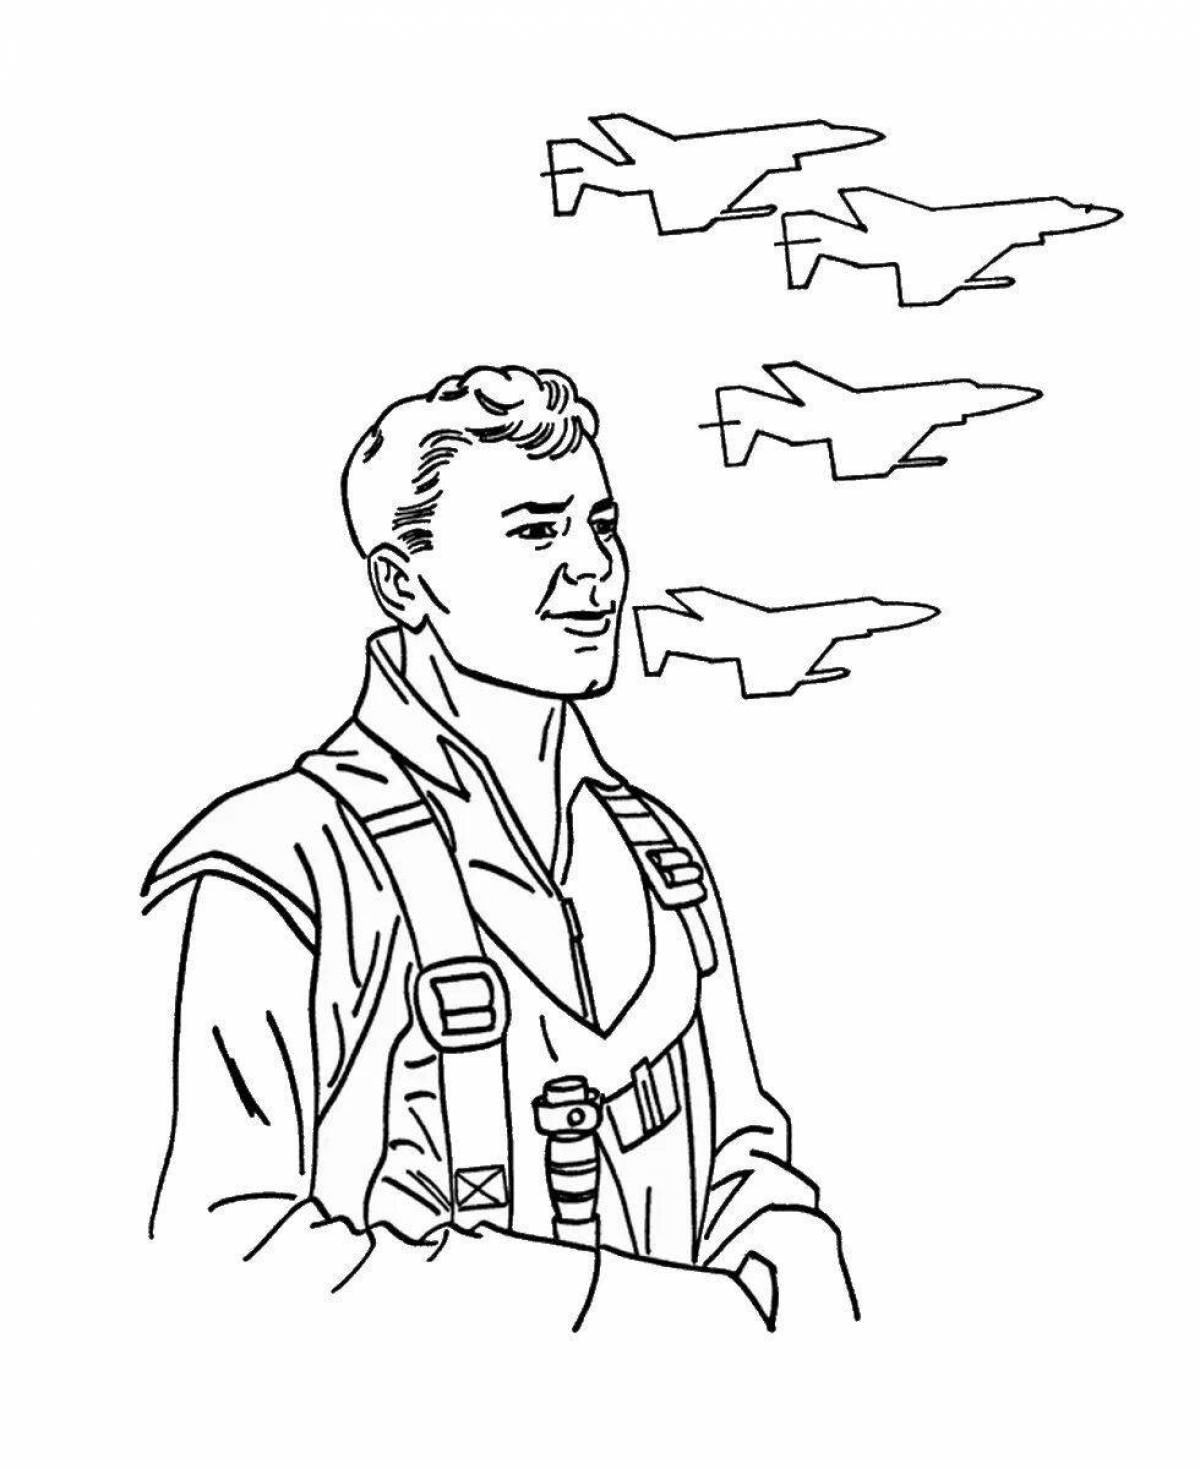 Courageous pilot coloring page